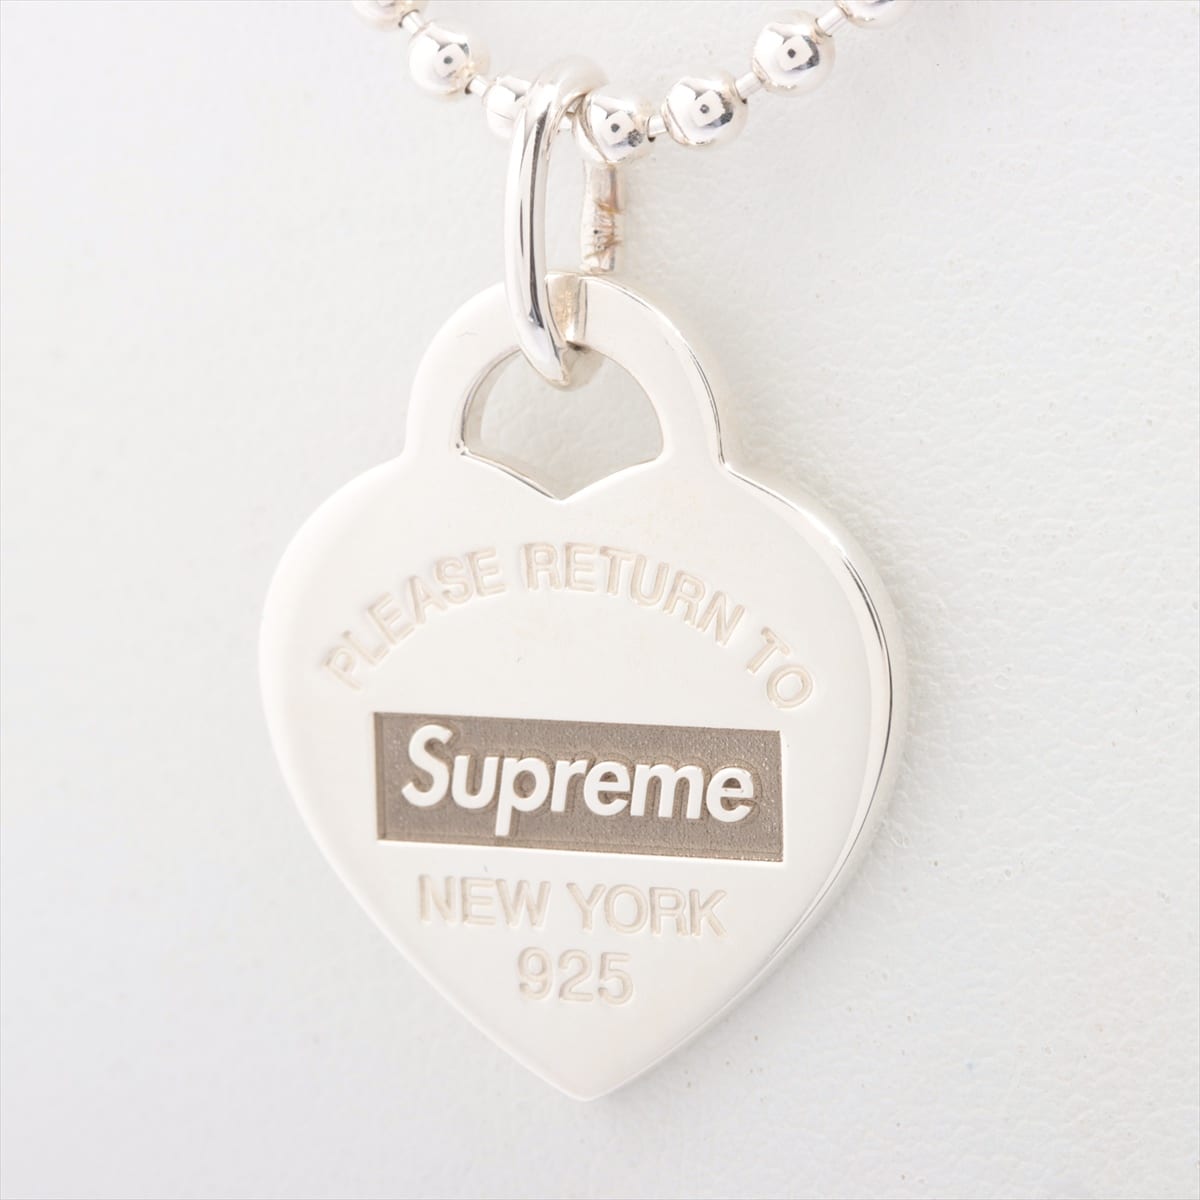 Supreme x Tiffany Return To Tiffany Heart Tag Necklace 925 16.9g Silver